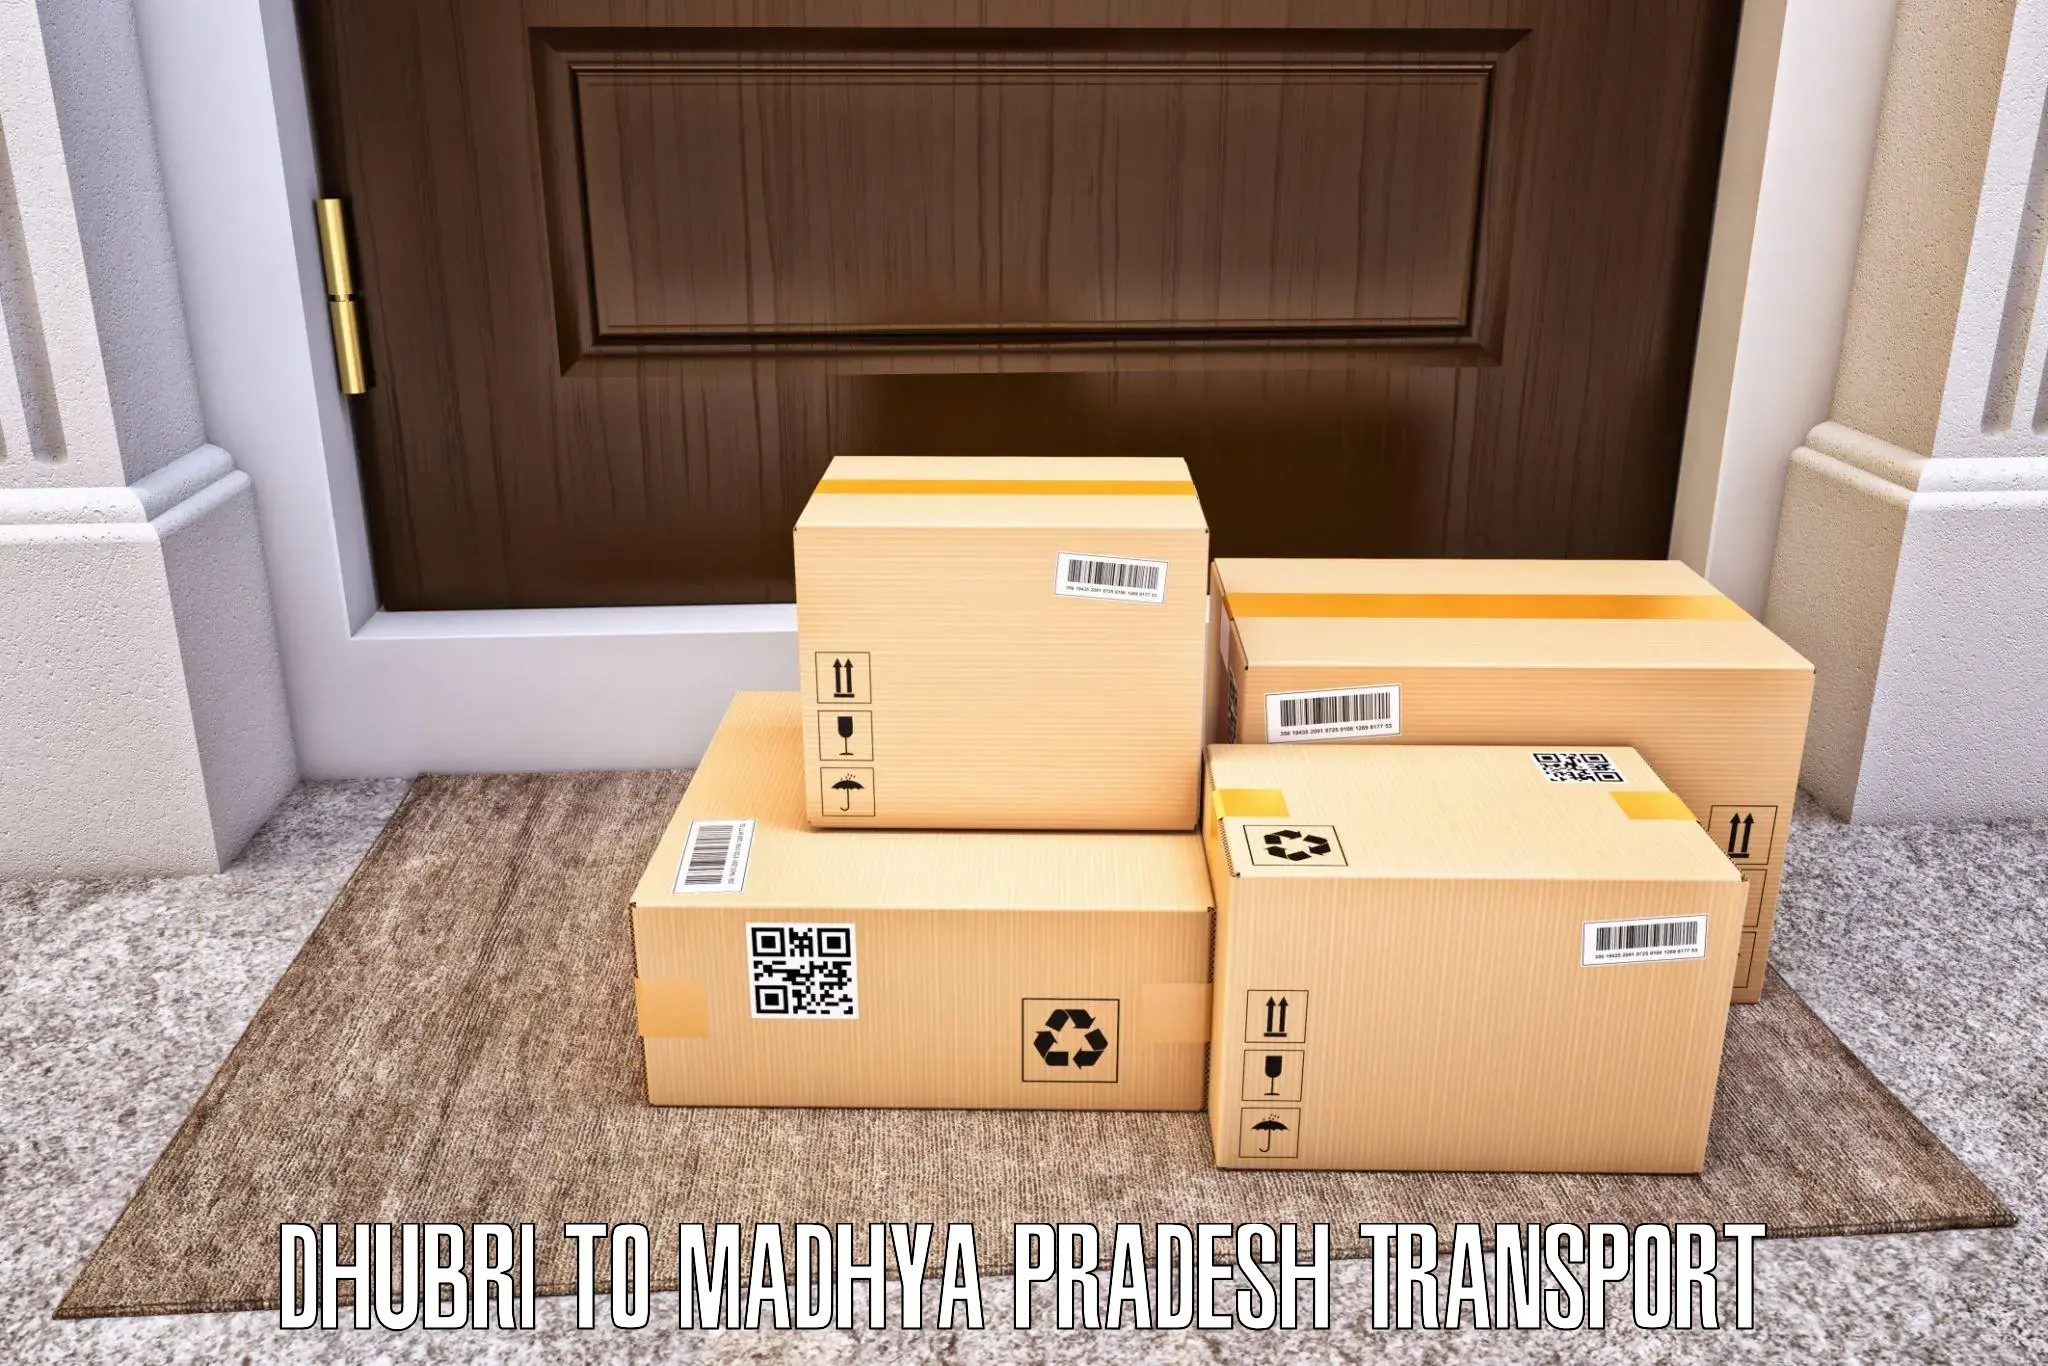 Domestic goods transportation services Dhubri to Ashoknagar